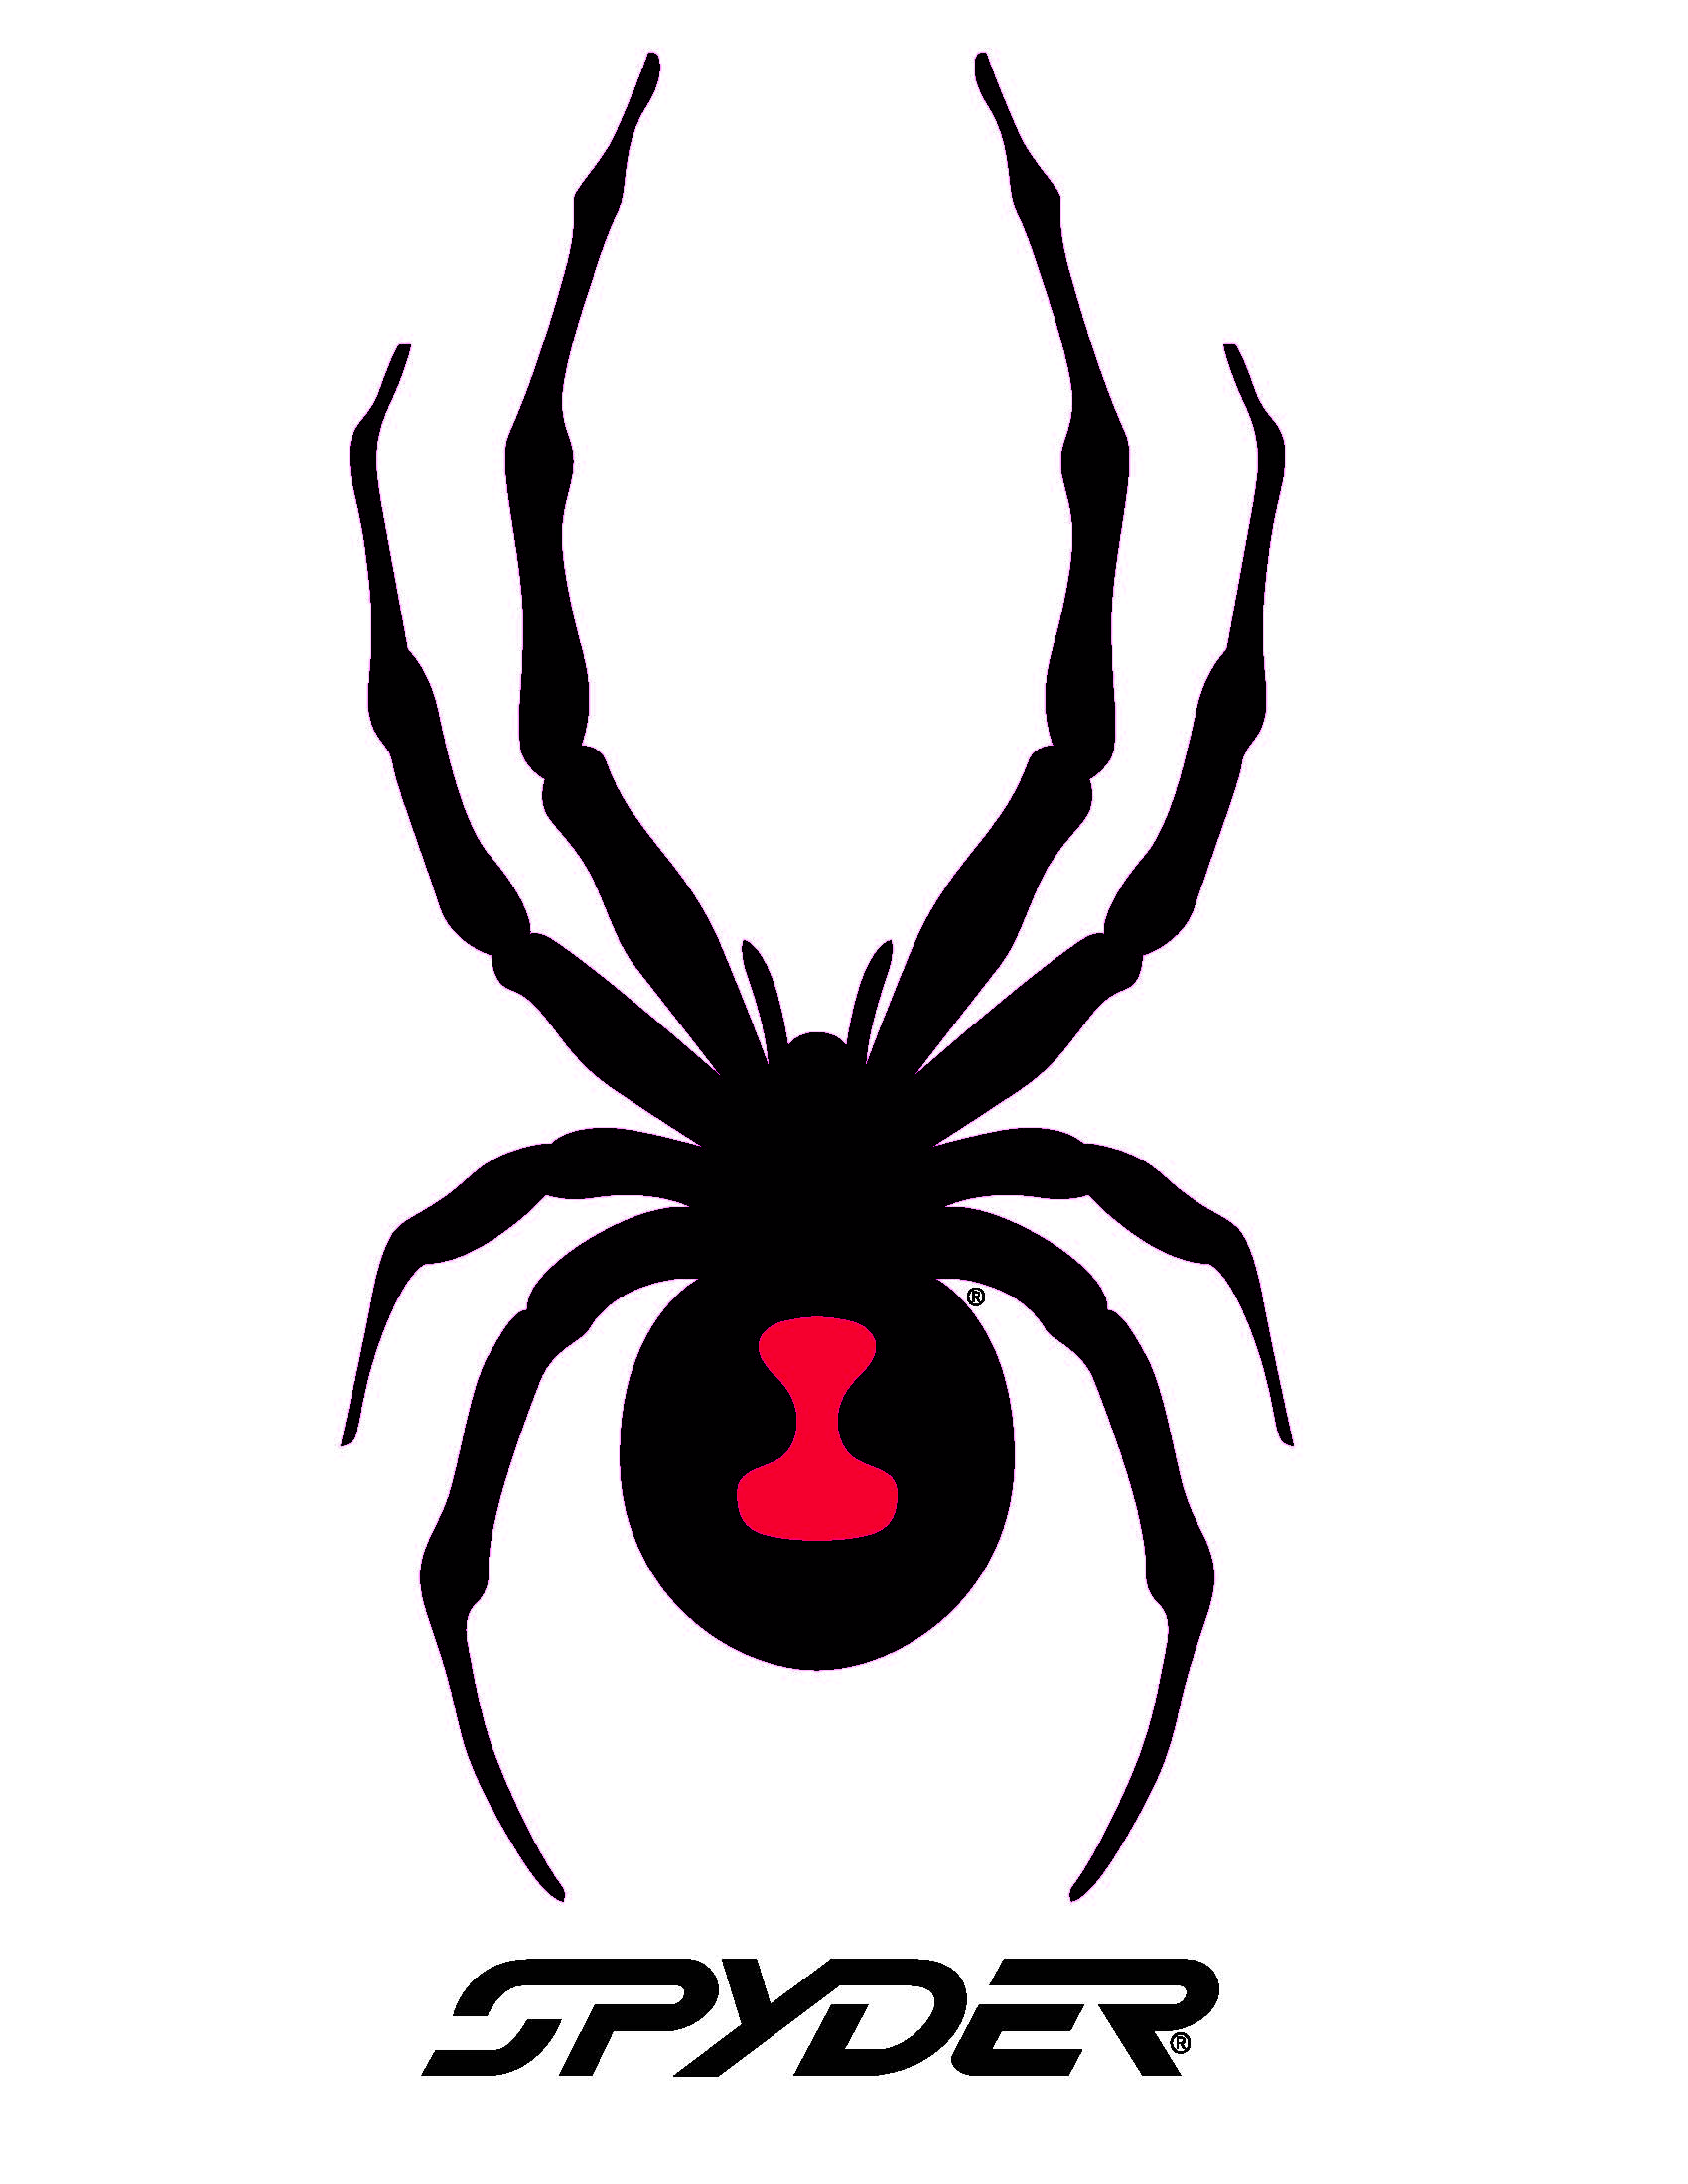 Spider Brand Logo - Spyder Logos